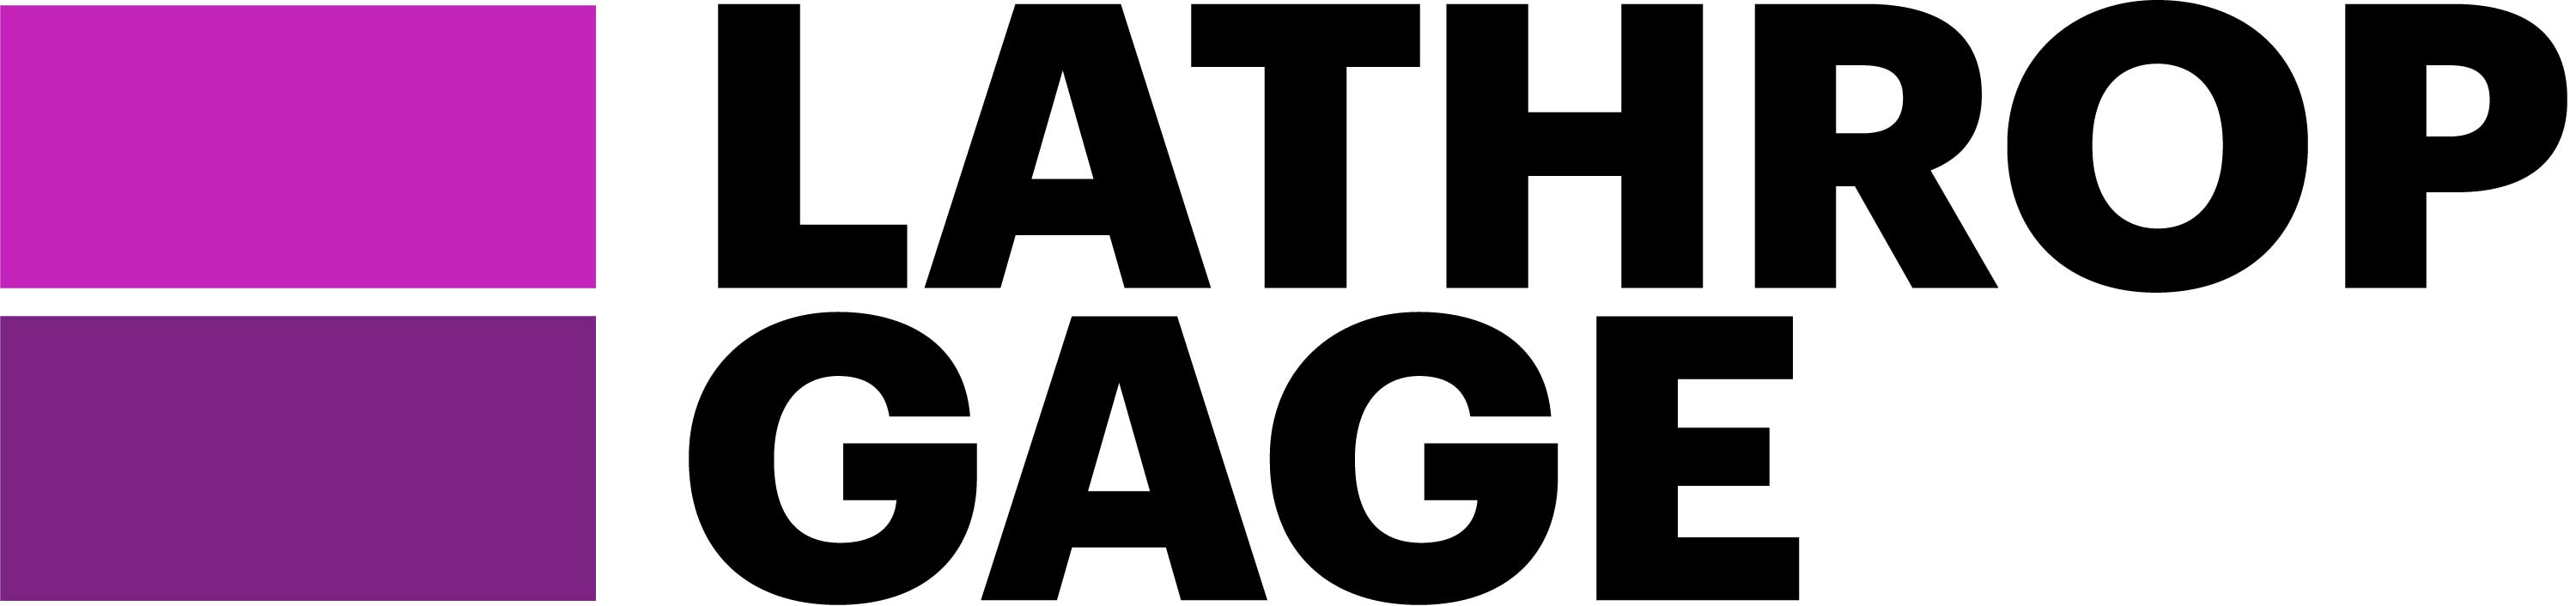 Gage Logo - lathrop-gage-logo-primary – Ronald McDonald House Charities of ...